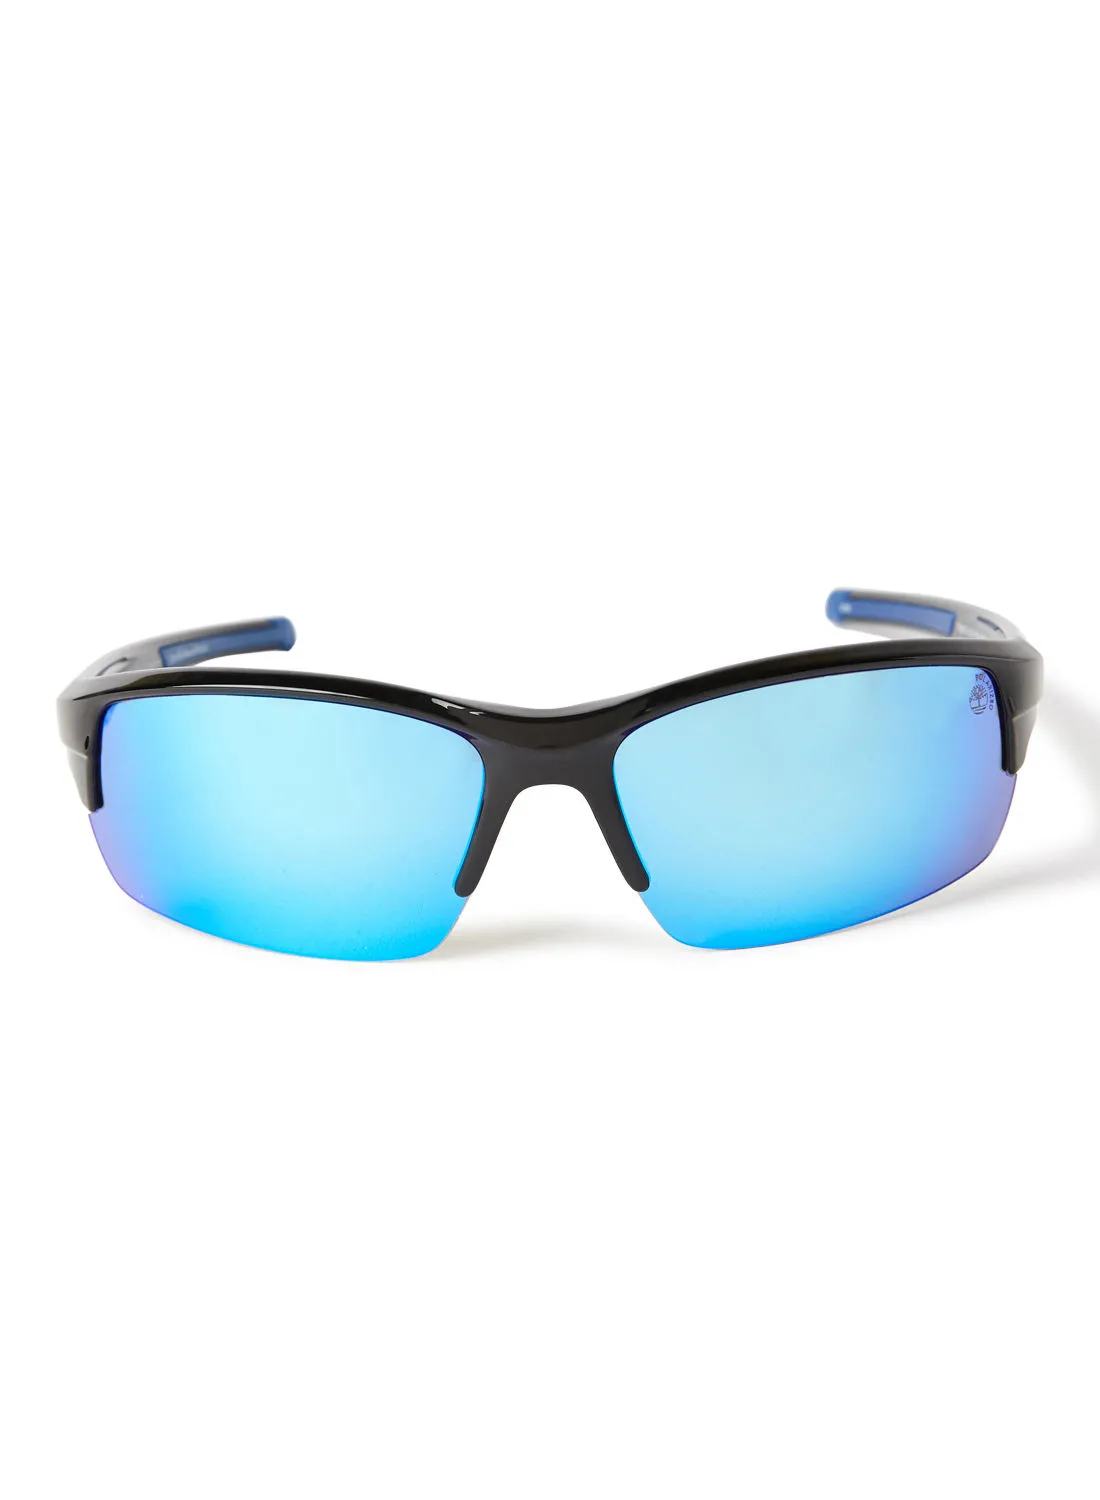 Timberland Men's UV Protective Sunglasses